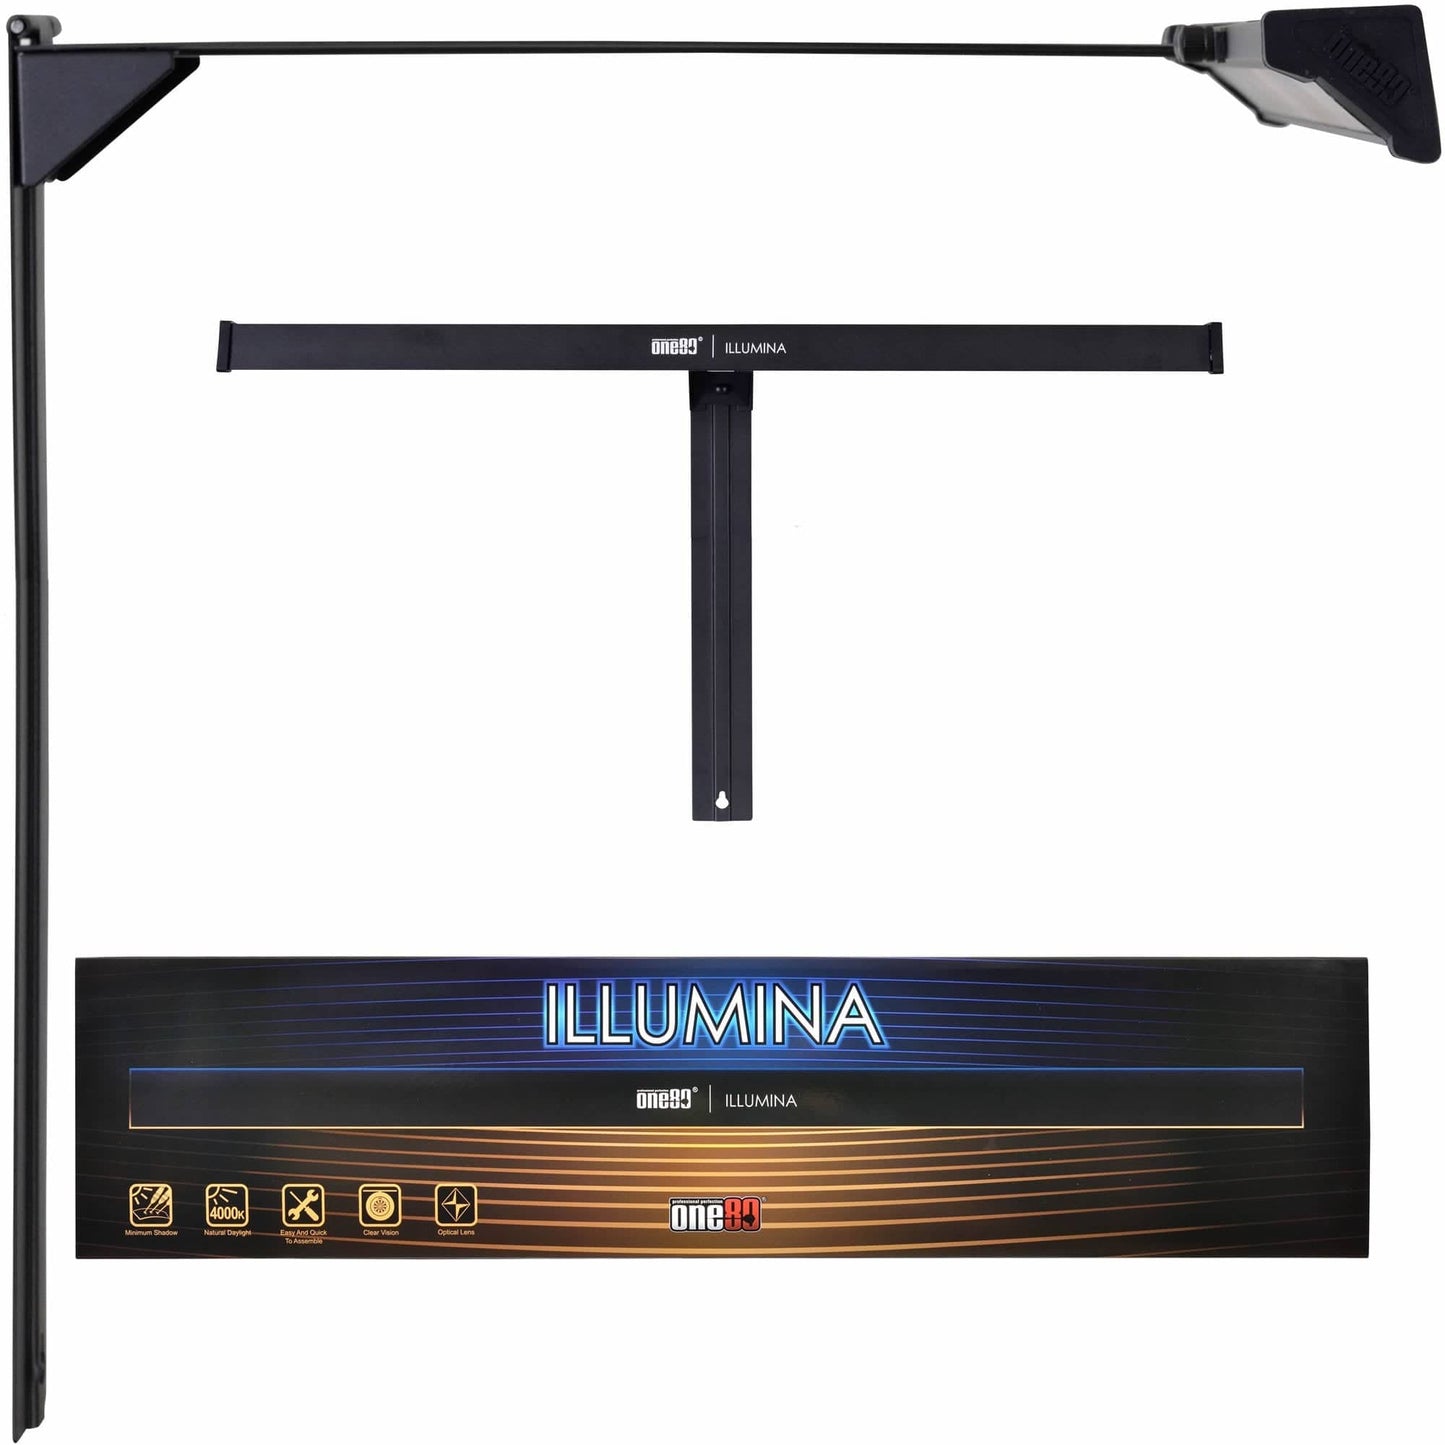 One80 Illumina Dartboard Light - Optical Lens - Daylight